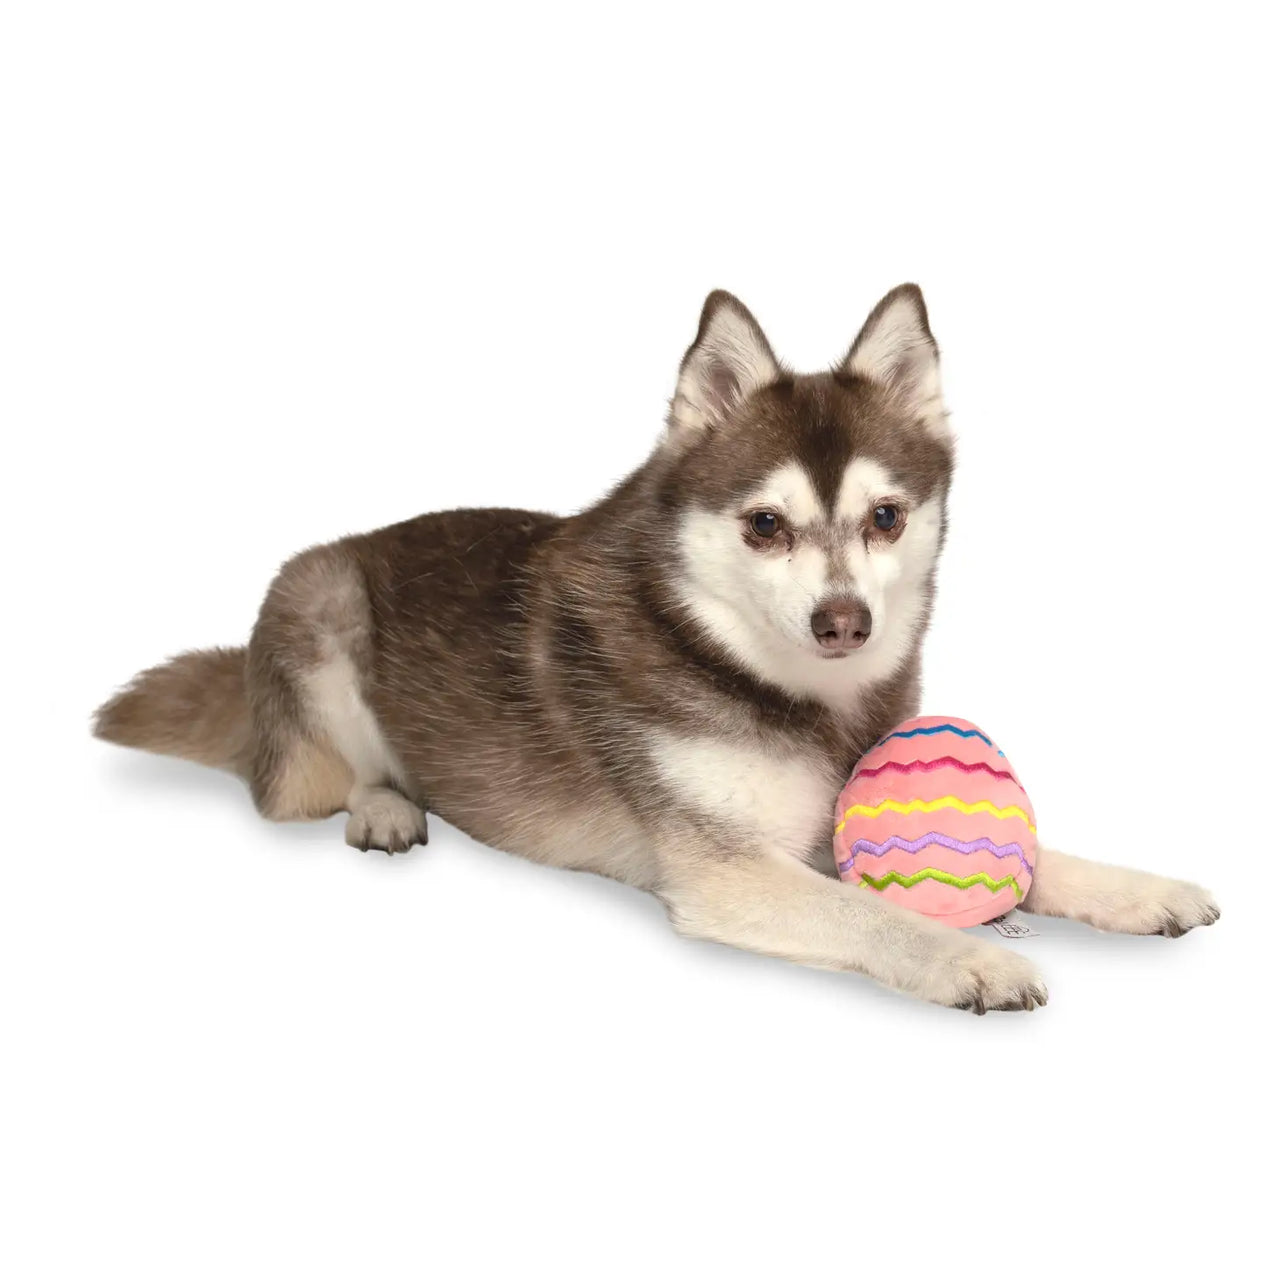 Easter Egg Plush Dog Toy - Pink  Midlee Designs   